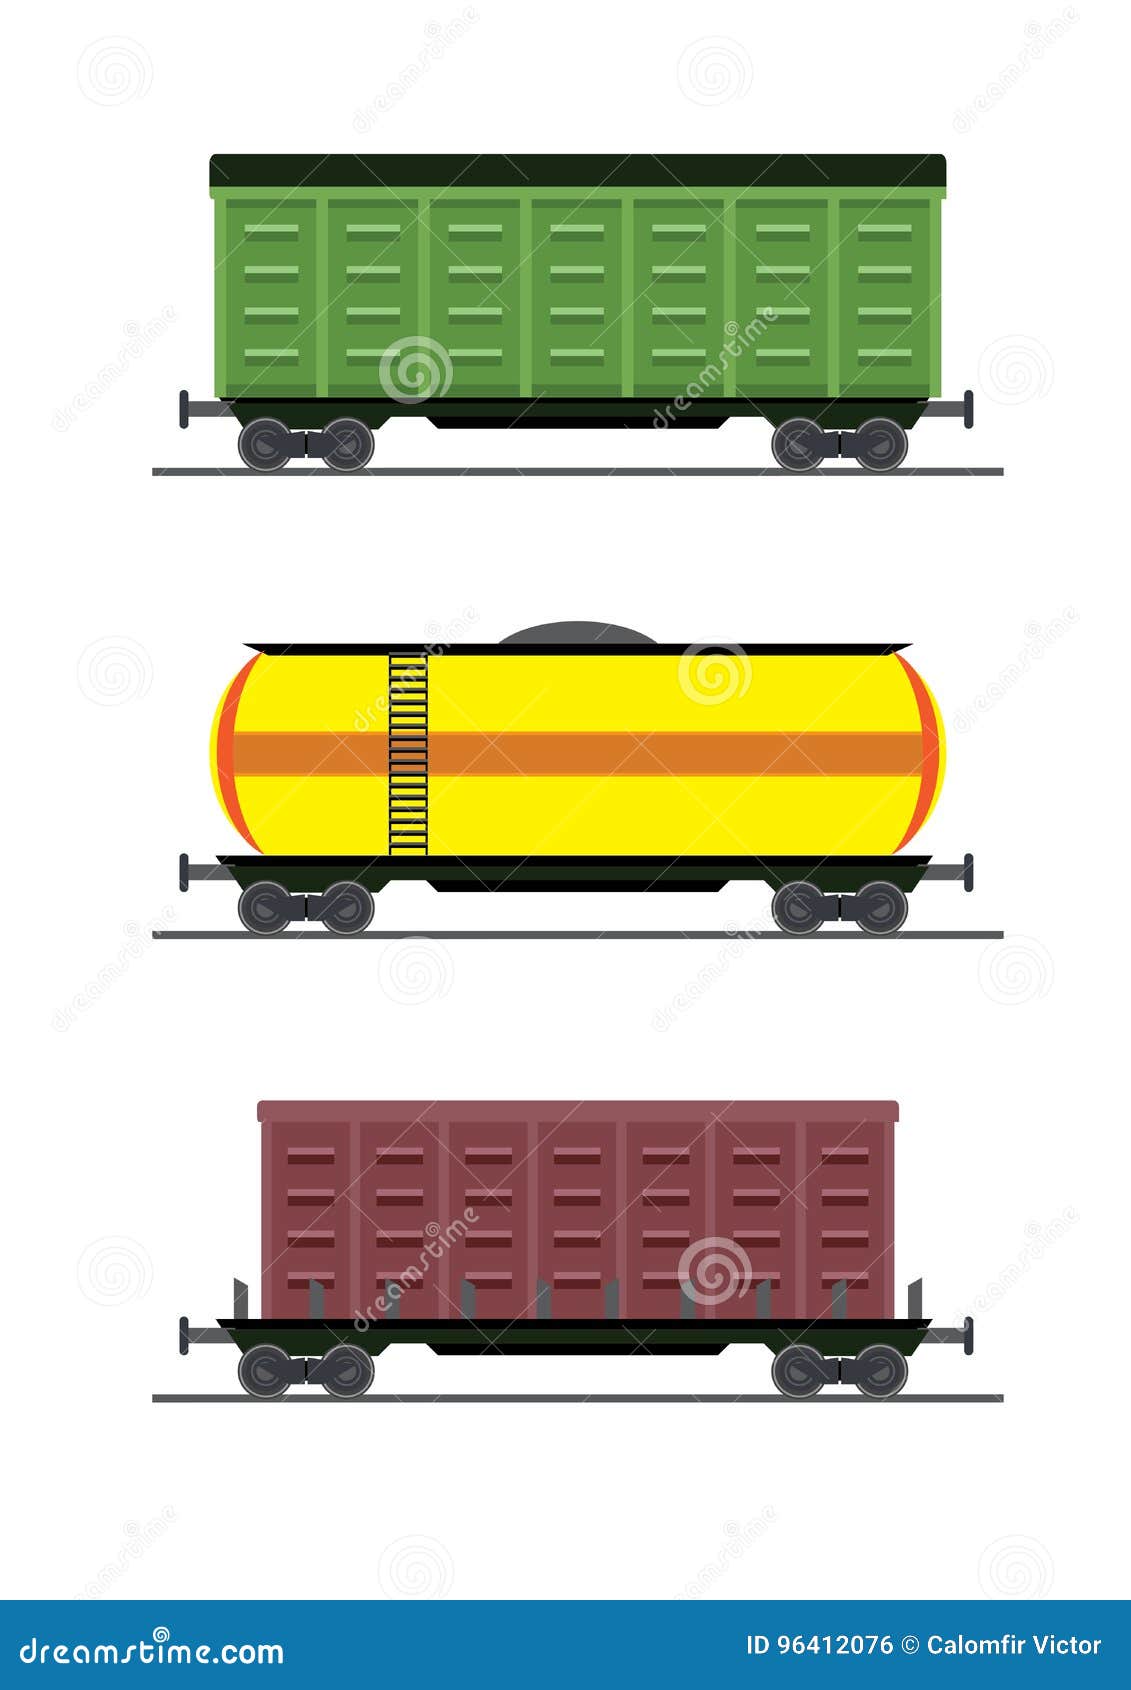 colorful train car vagon. on the railway